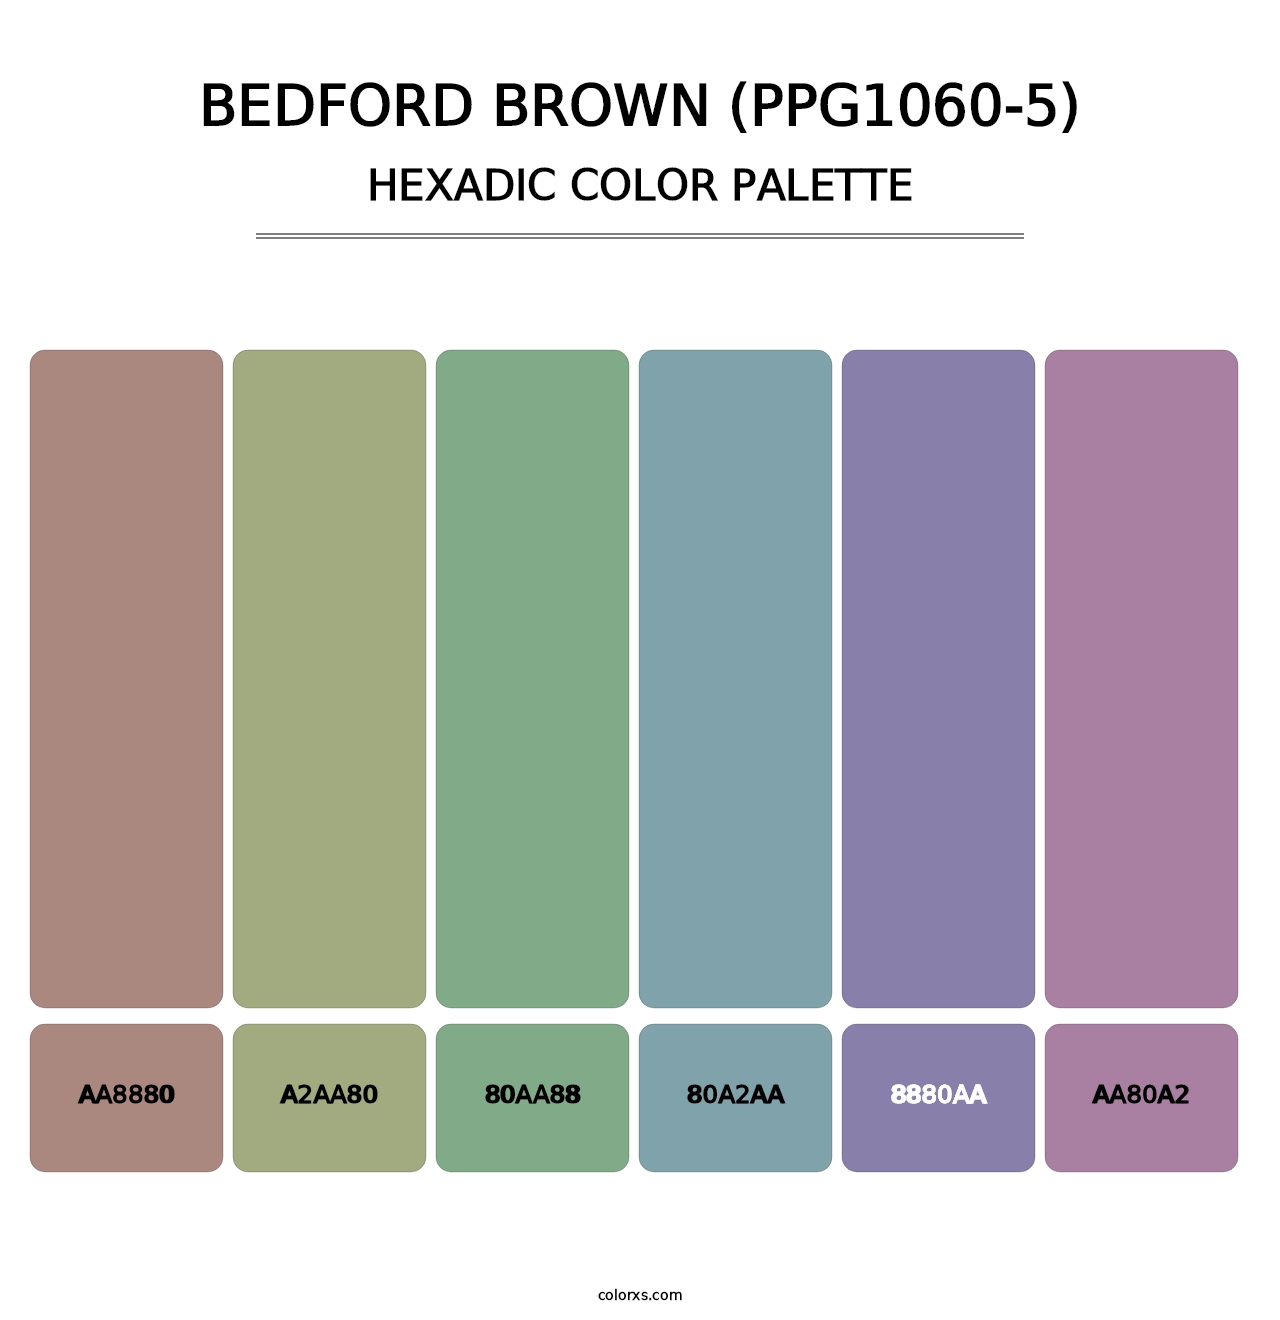 Bedford Brown (PPG1060-5) - Hexadic Color Palette